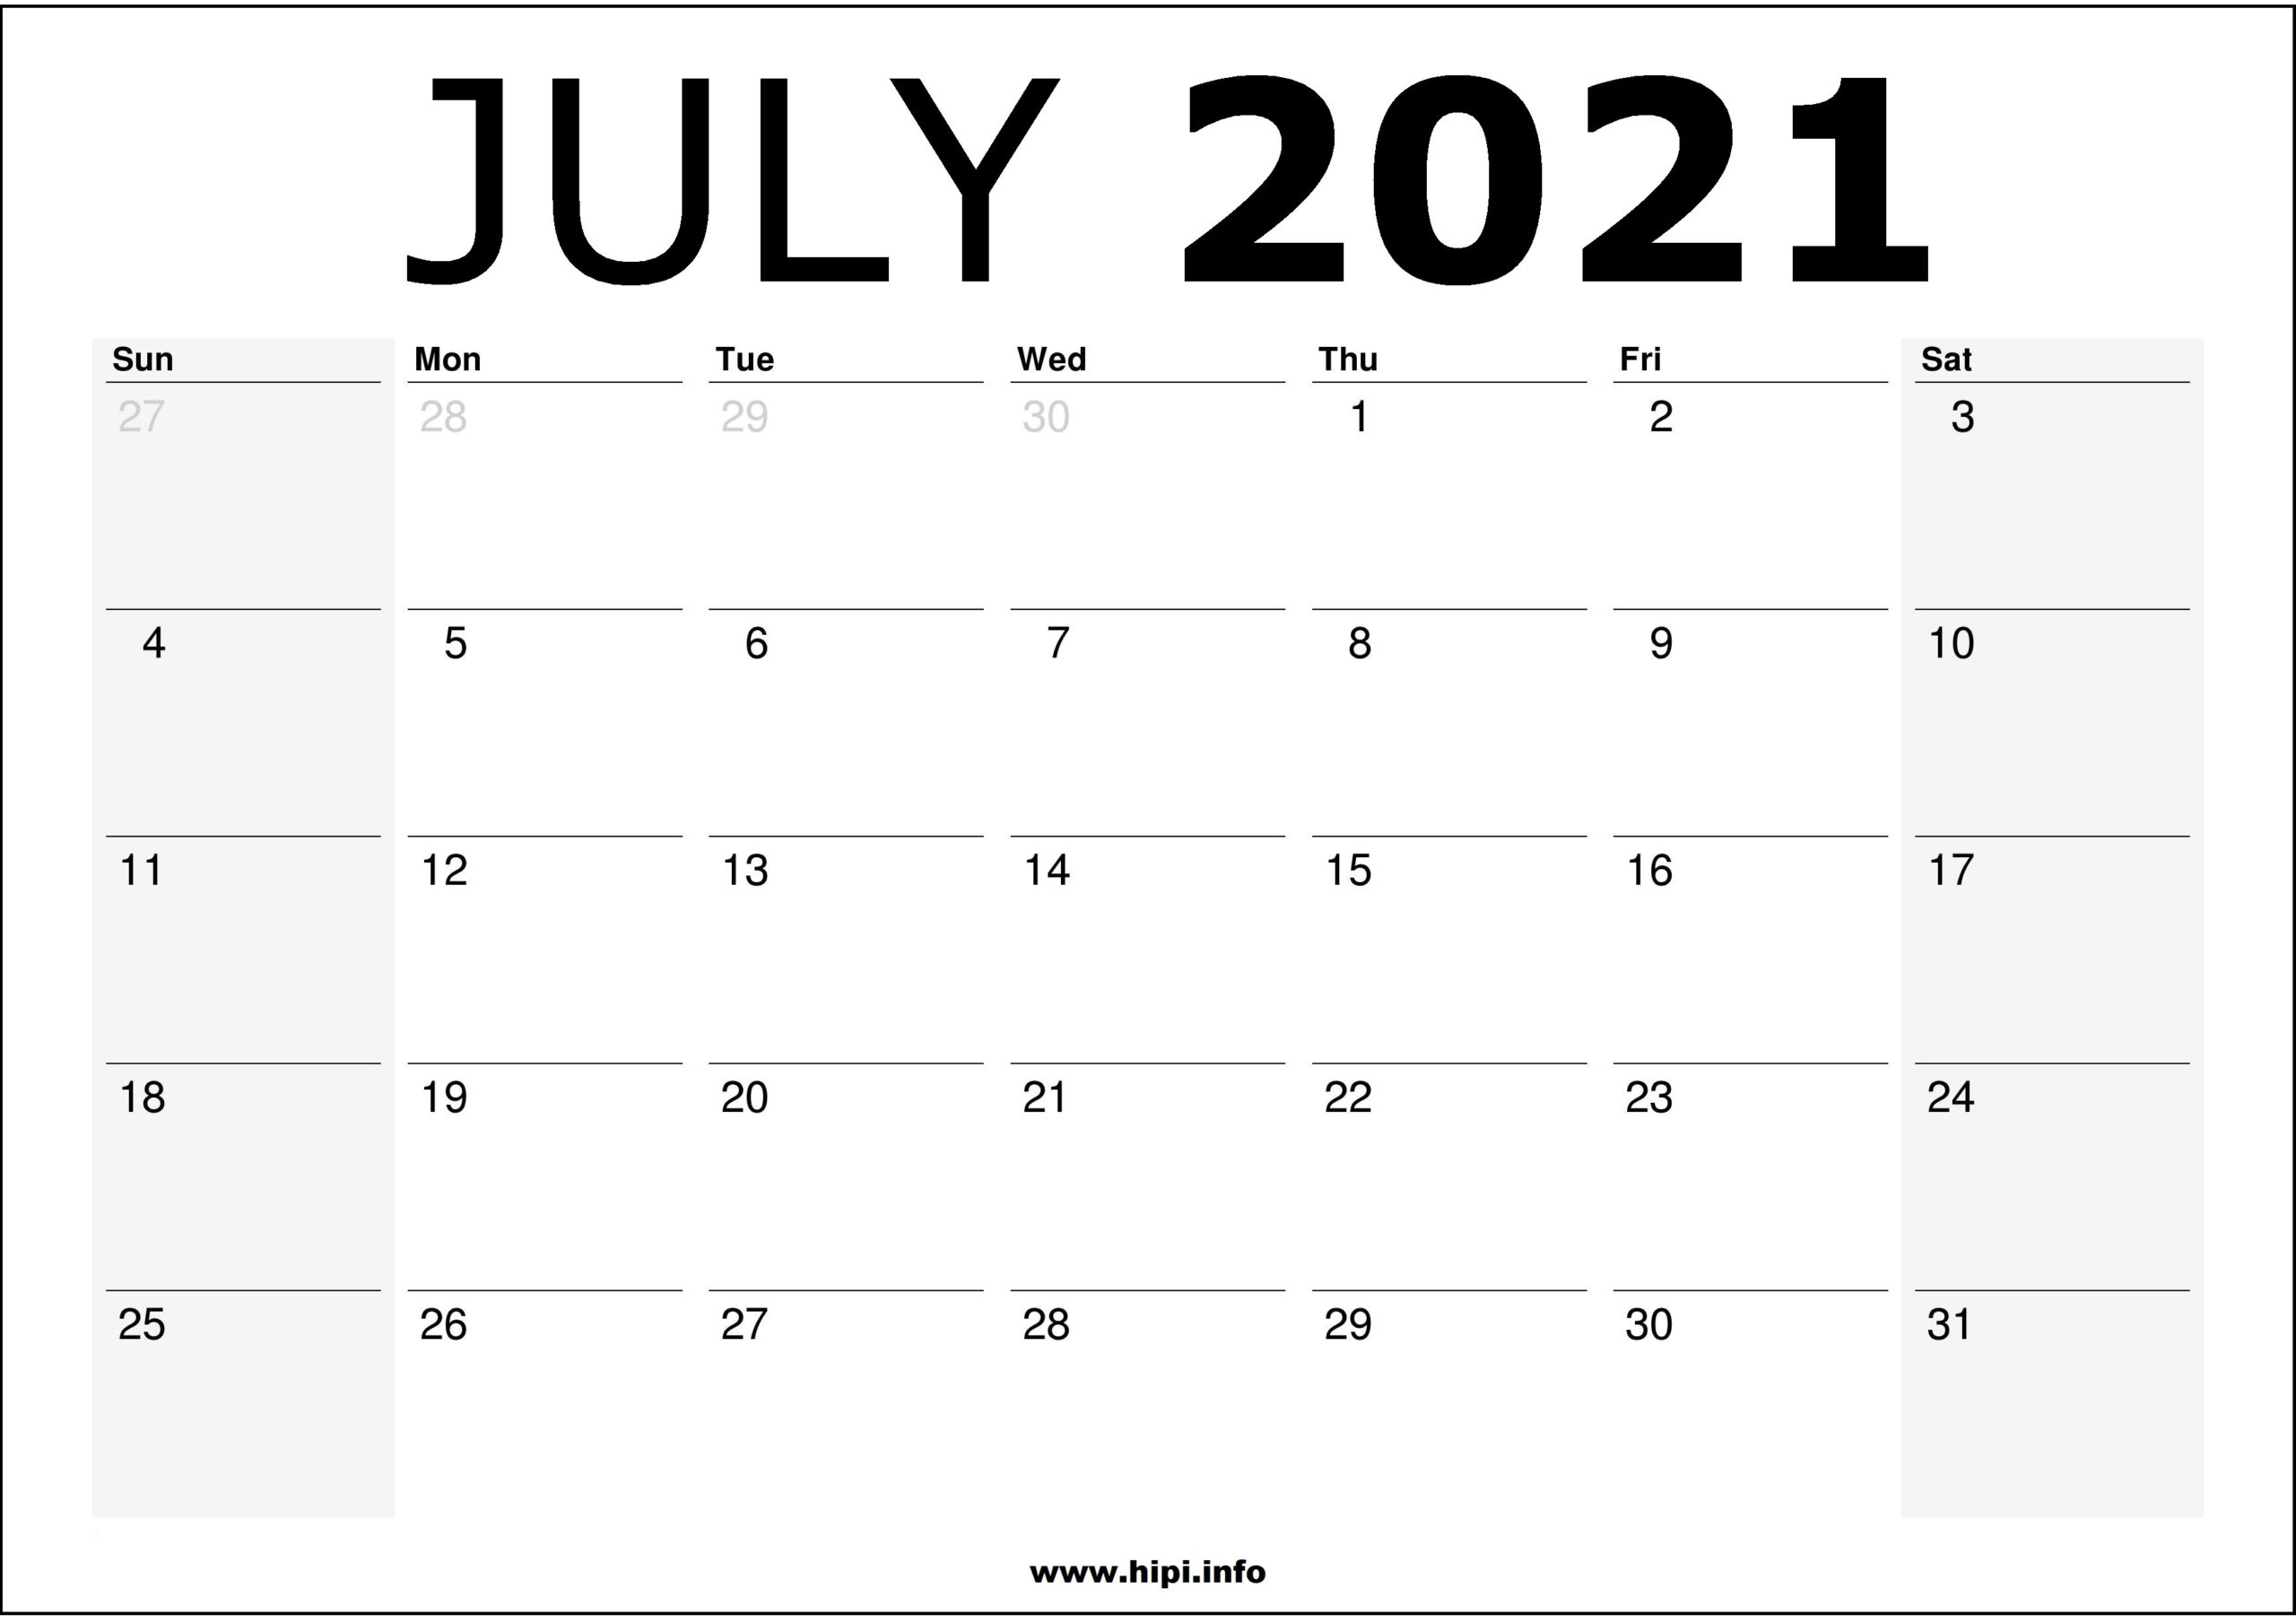 July 2021 Calendar Printable Monthly Calendar Free Download Hipi info